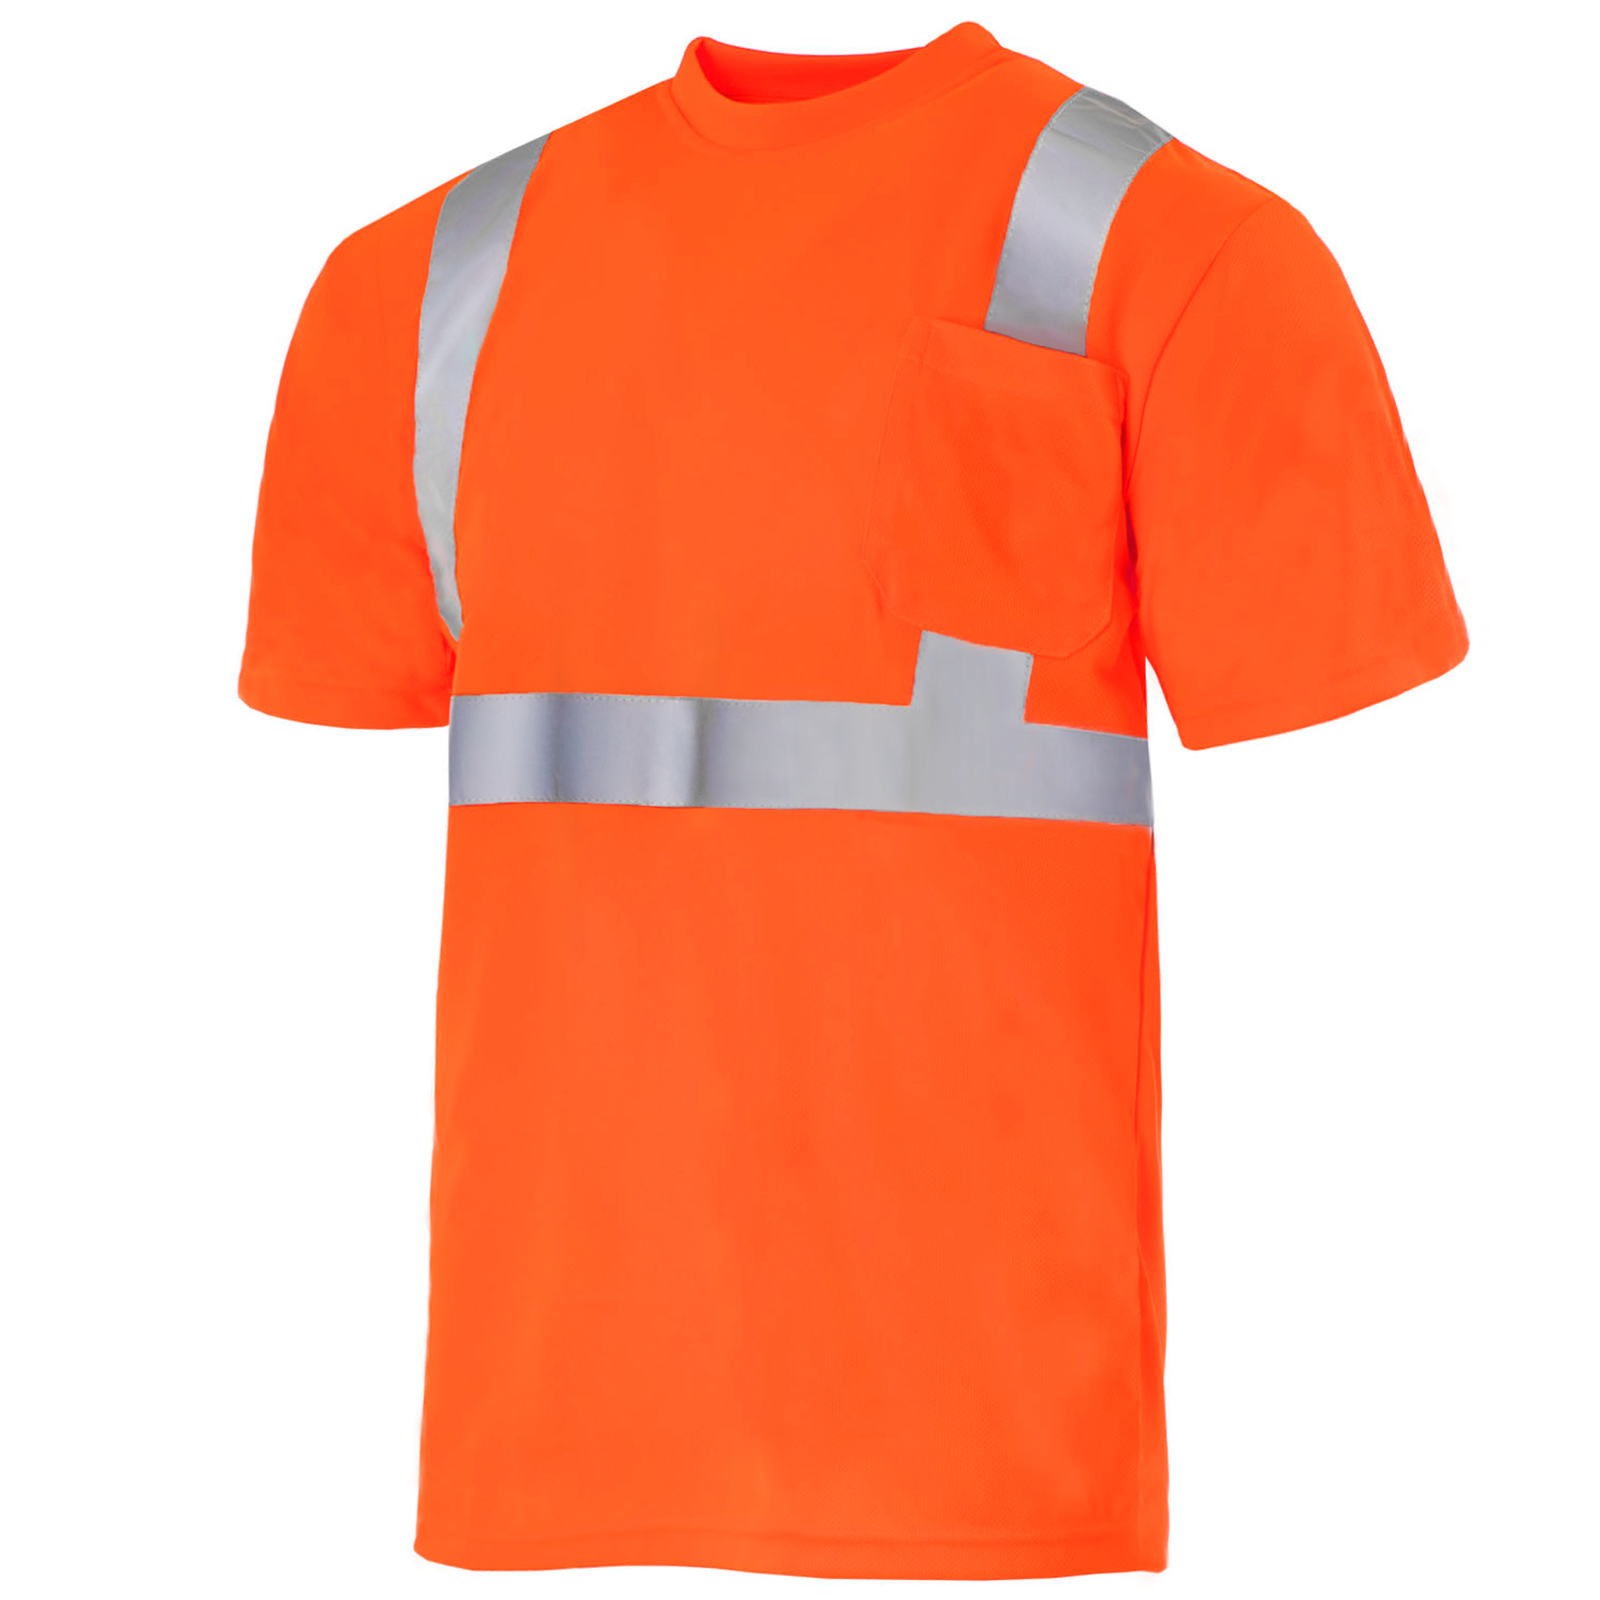 Diagonal view of the orange hi-vis reflective safety shirt with pocket